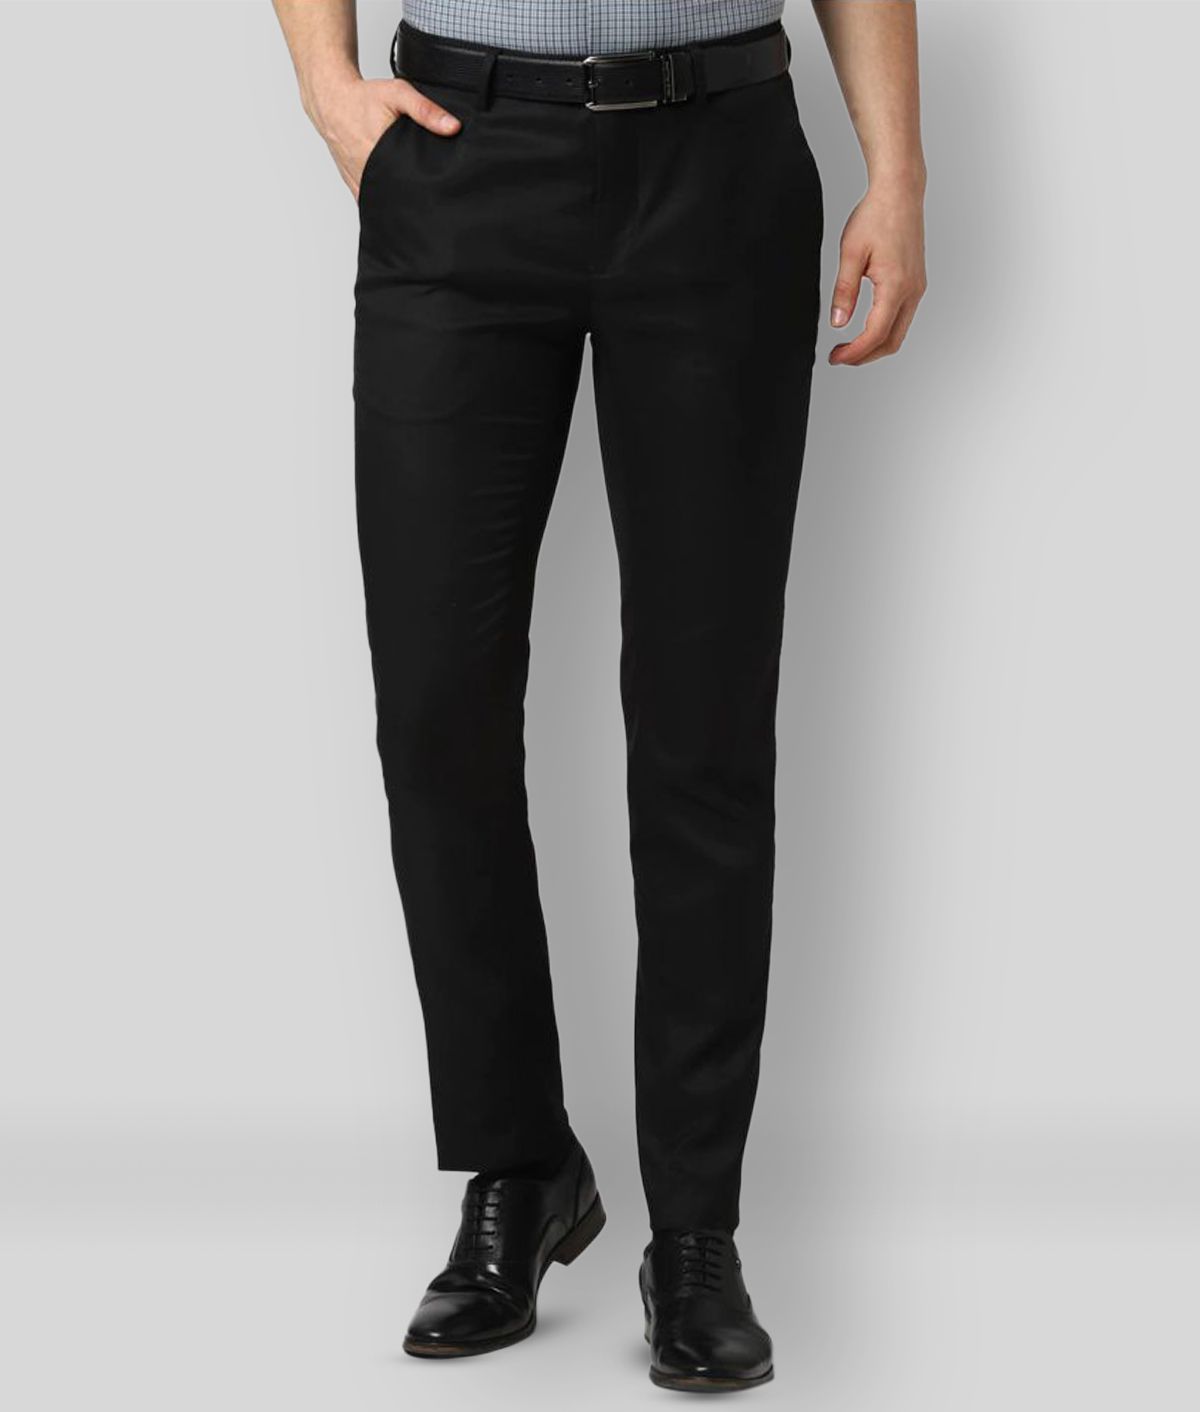     			Haul Chic - Black Cotton Blend Slim - Fit Men's Trousers ( Pack of 1 )